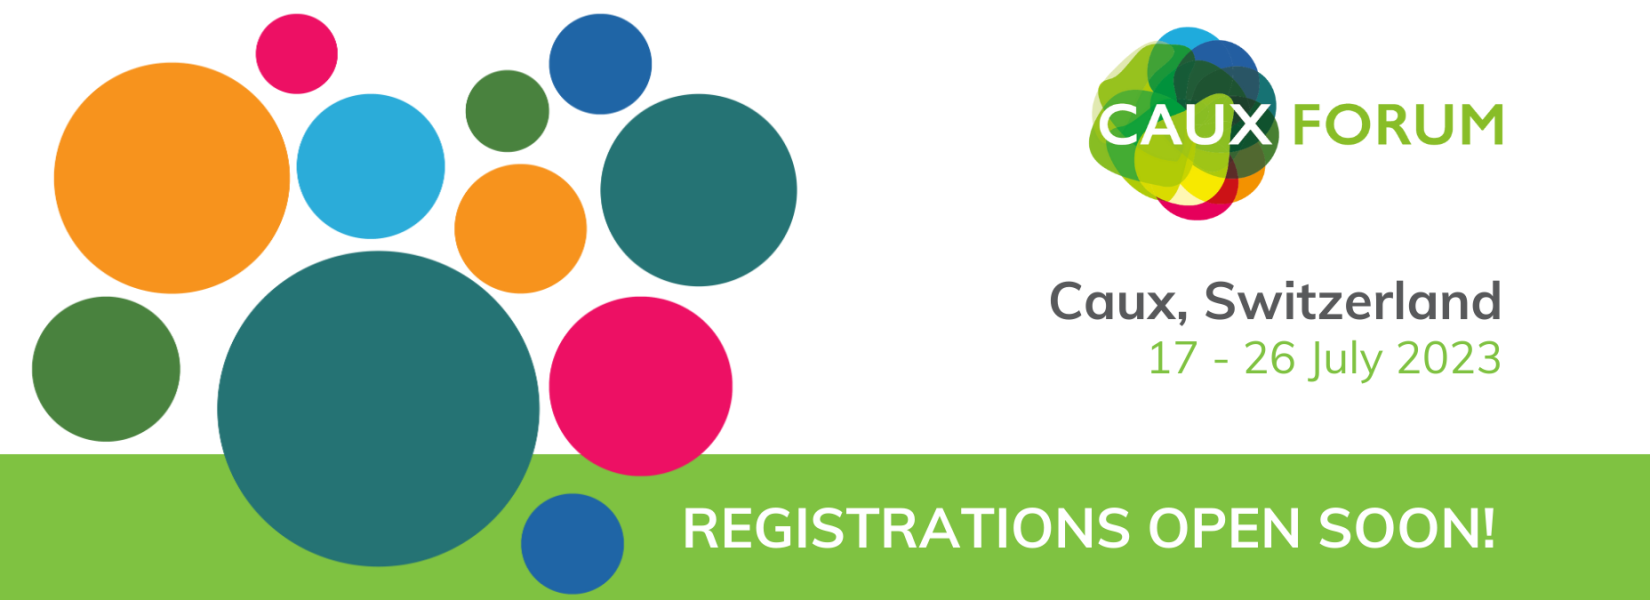 Caux Forum registration opens soon